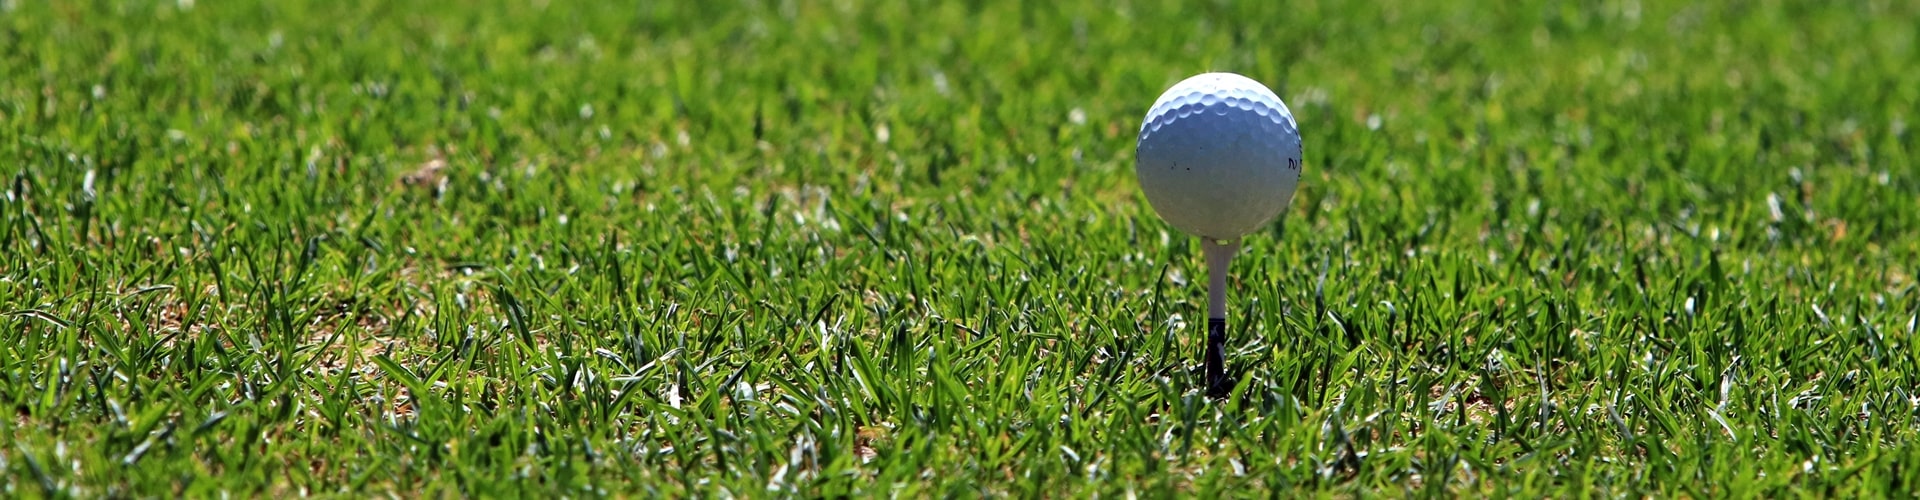 Golfball im Rasen